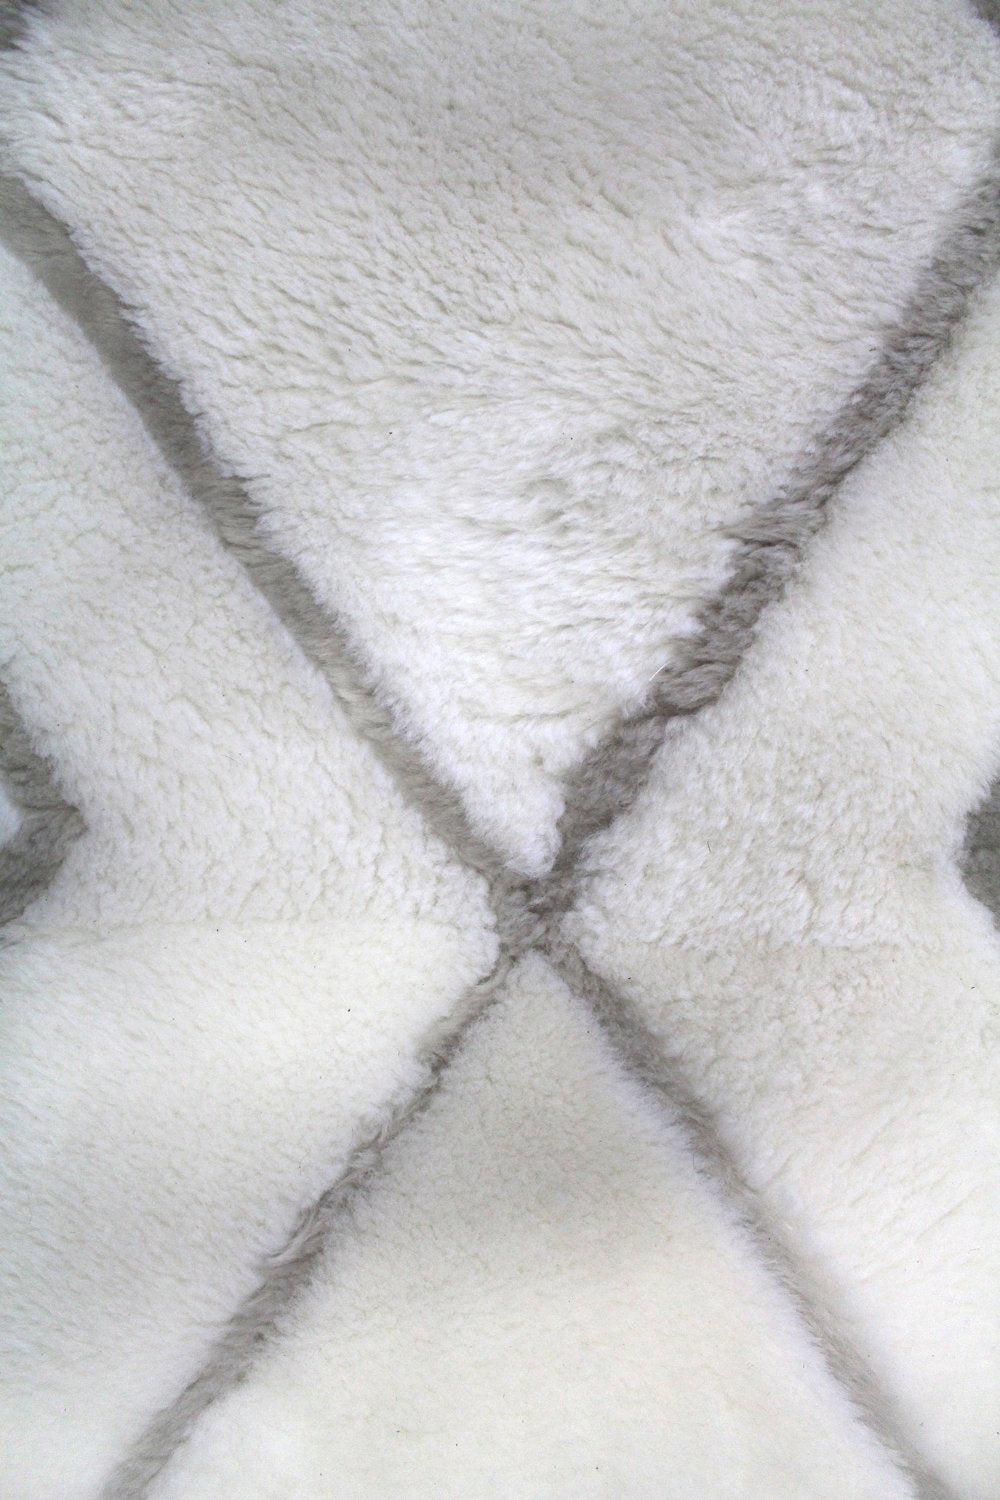 Fur: Snow Animal Hide Contemporary Rug, J58515